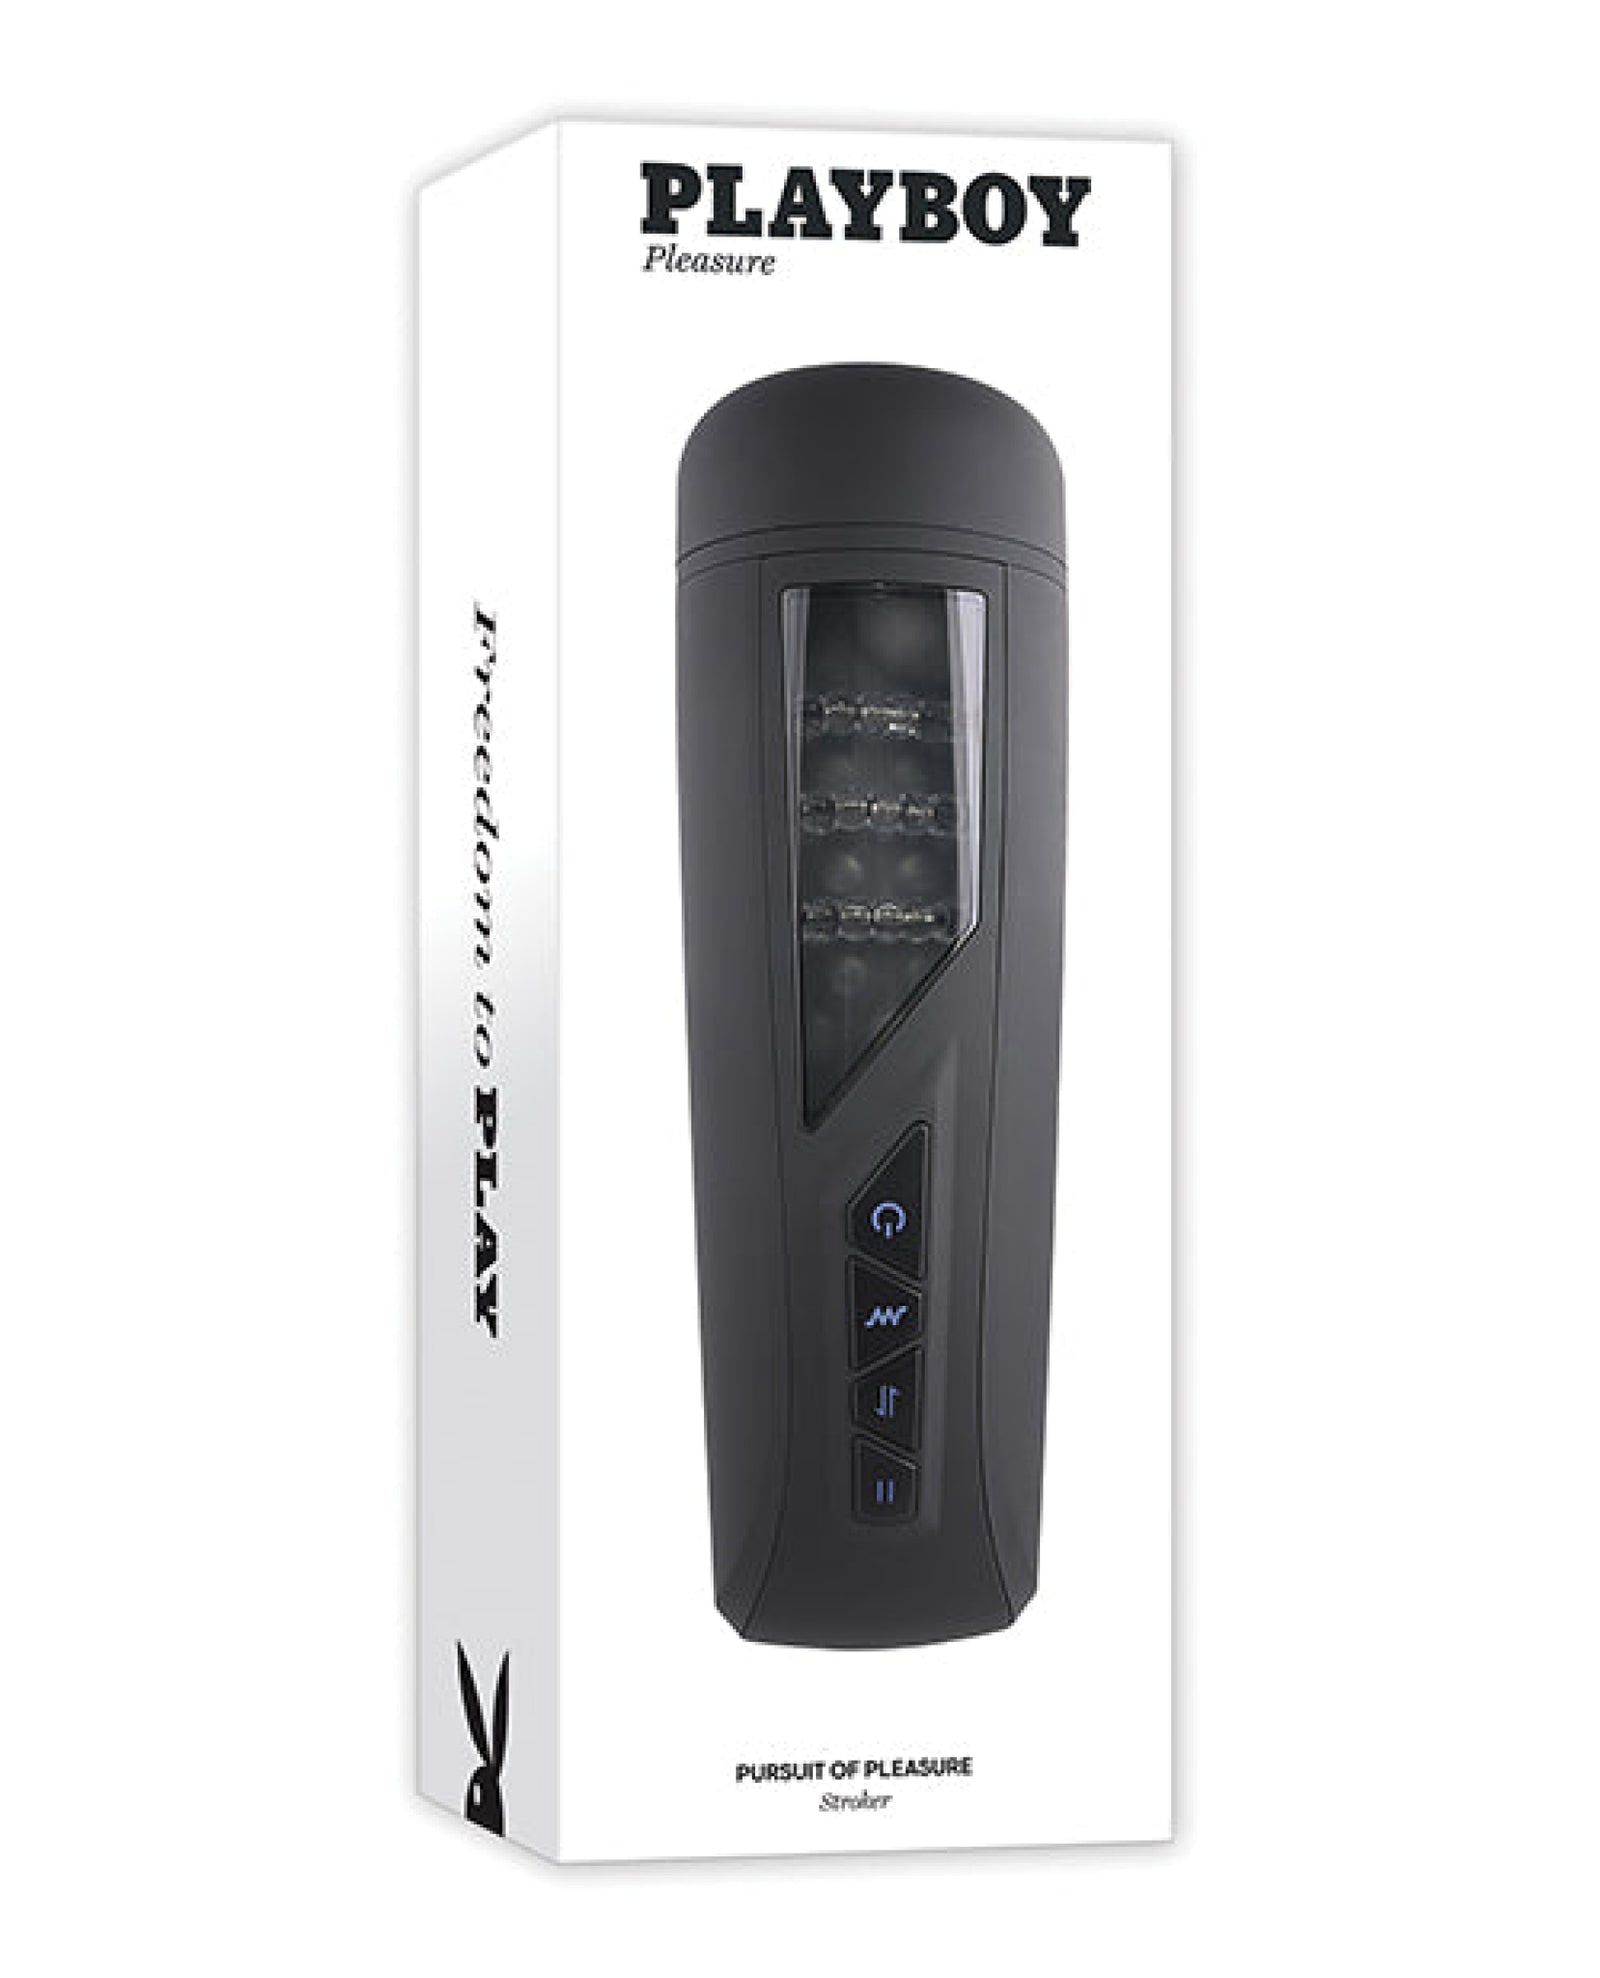 Playboy Pleasure Pursuit Of Pleasure Stroker - 2 Am Playboy